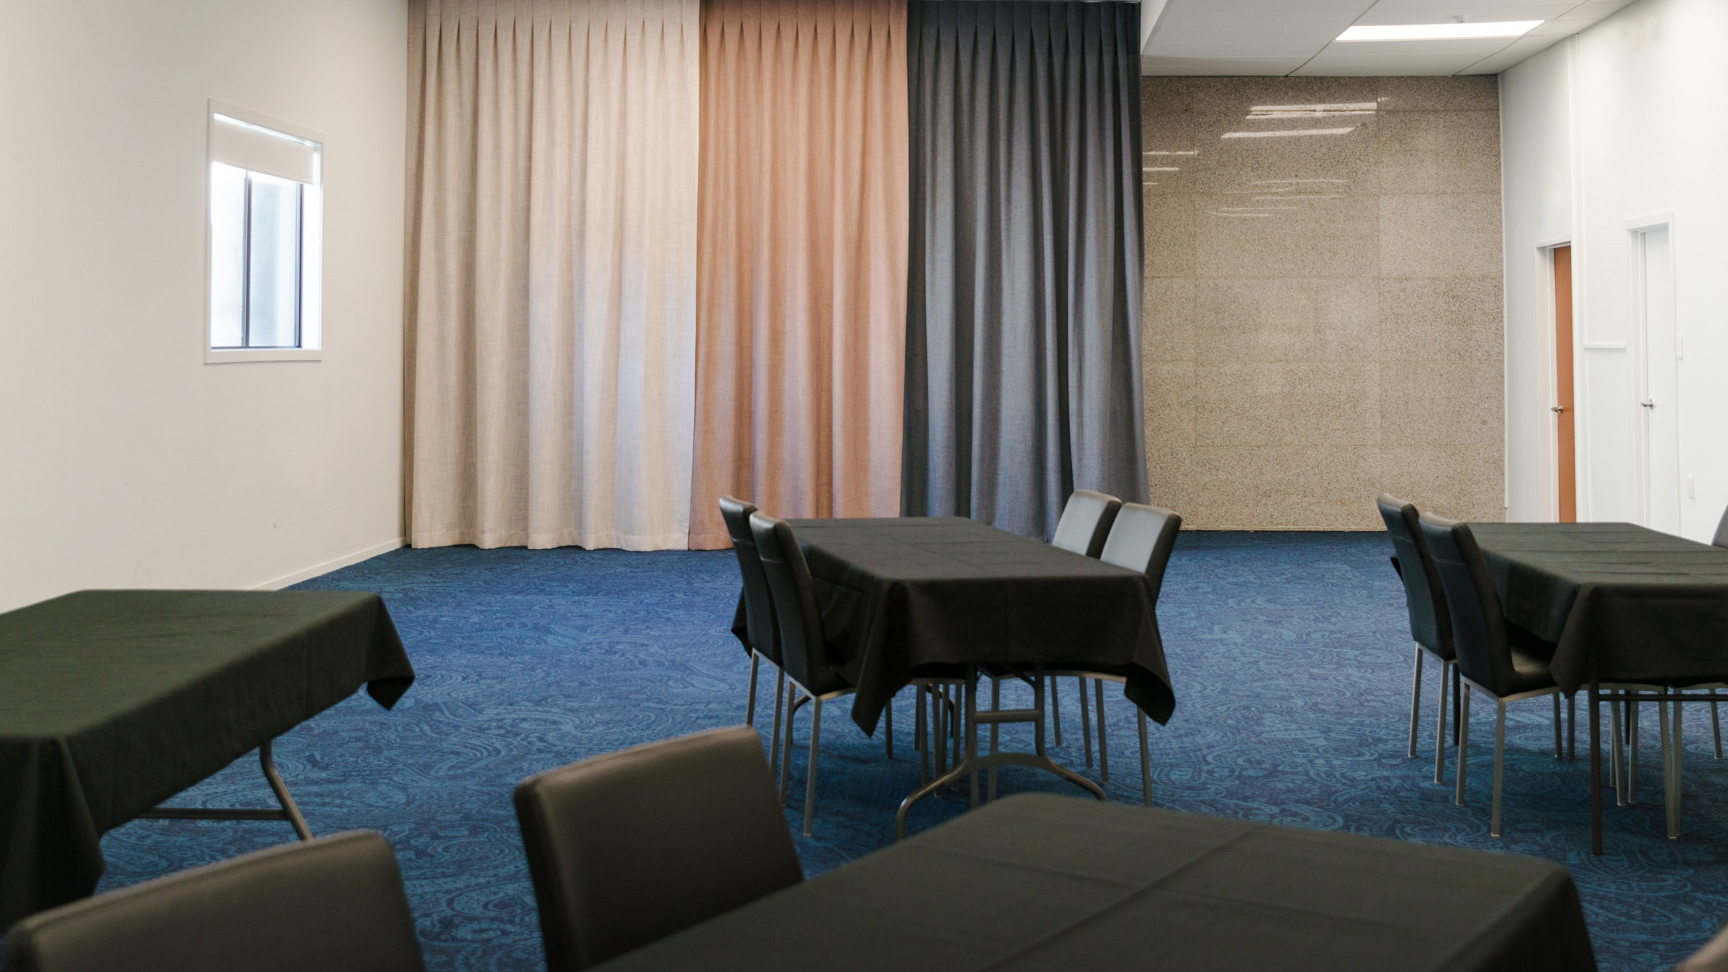 Dunedin design company completes a modern interior design for hotel